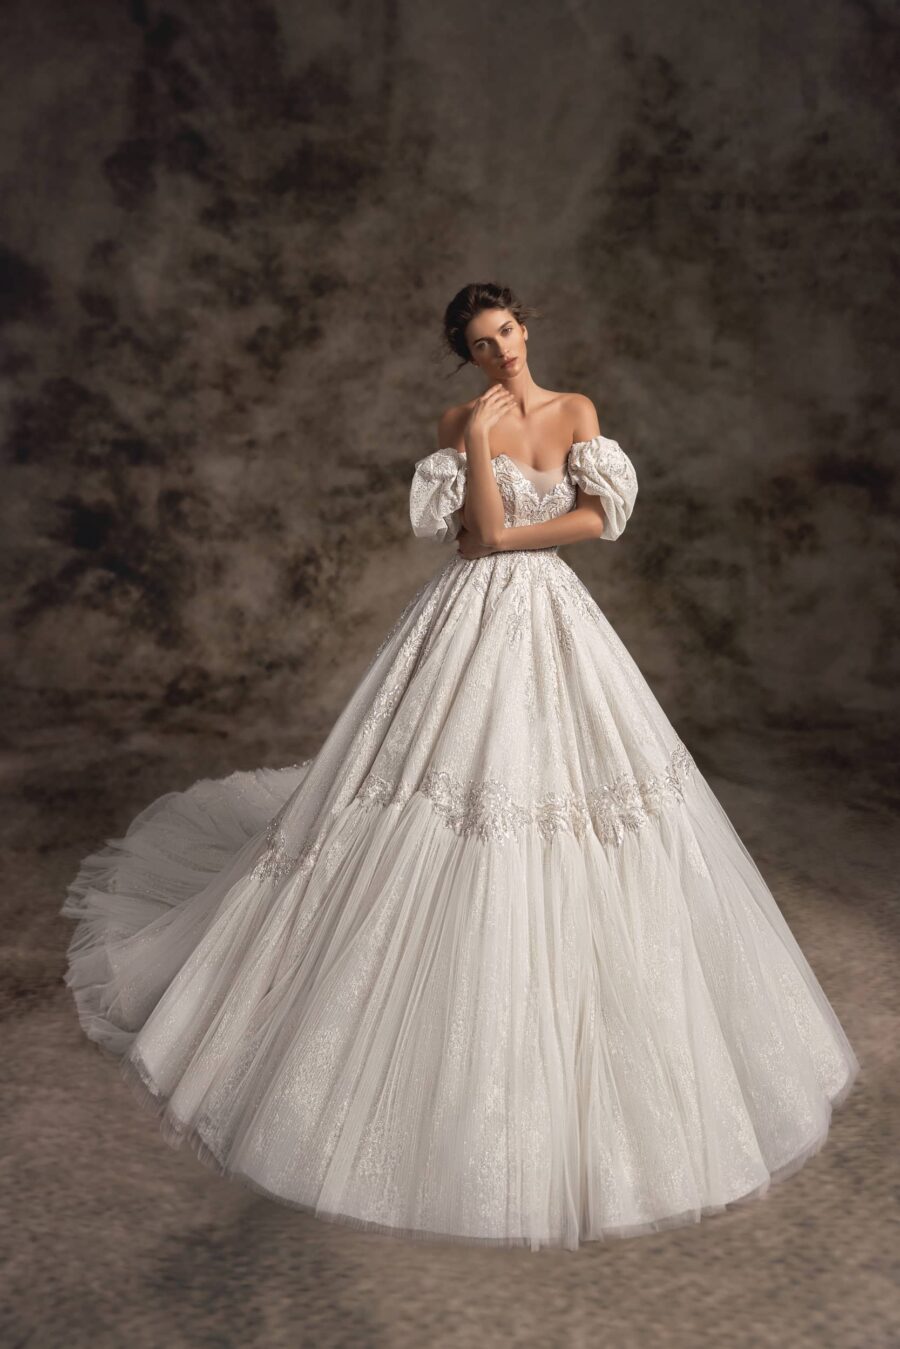 Karmen 5 wedding dress by woná from notte-d-opera collection